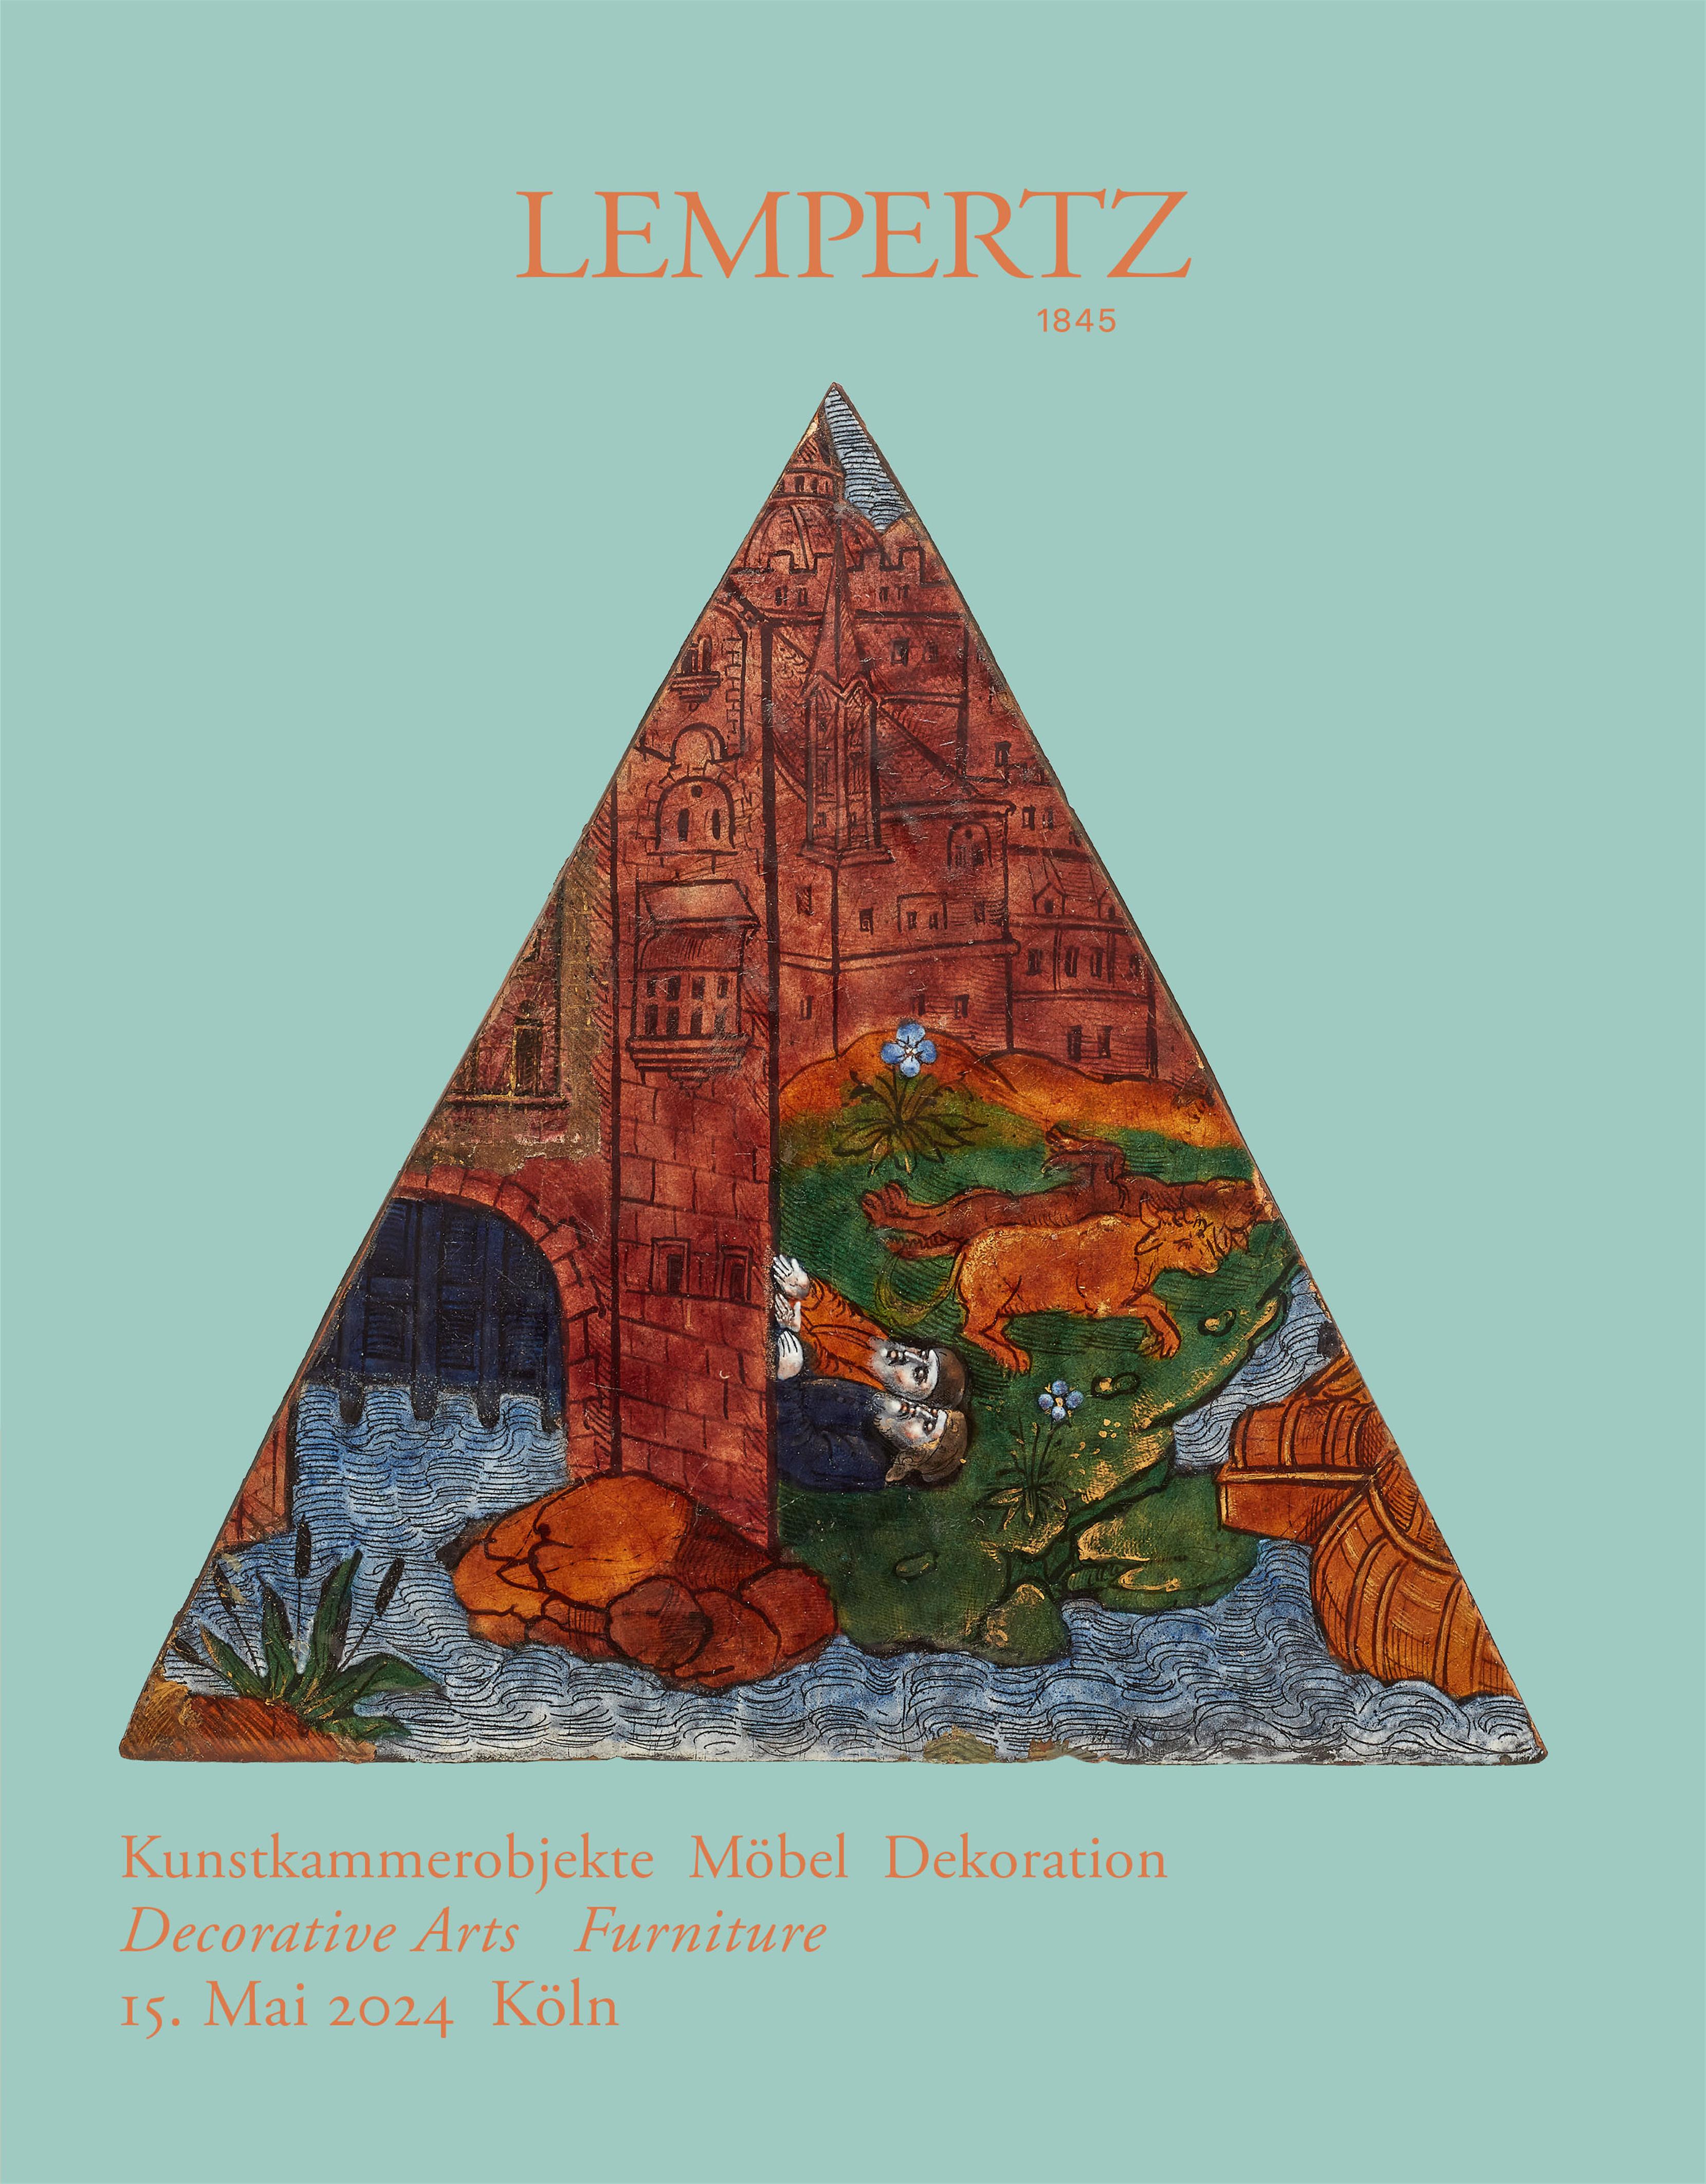 Auktionshaus - Kunstkammerobjekte Möbel Dekoration - Auktionskatalog 1244 – Auktionshaus Lempertz